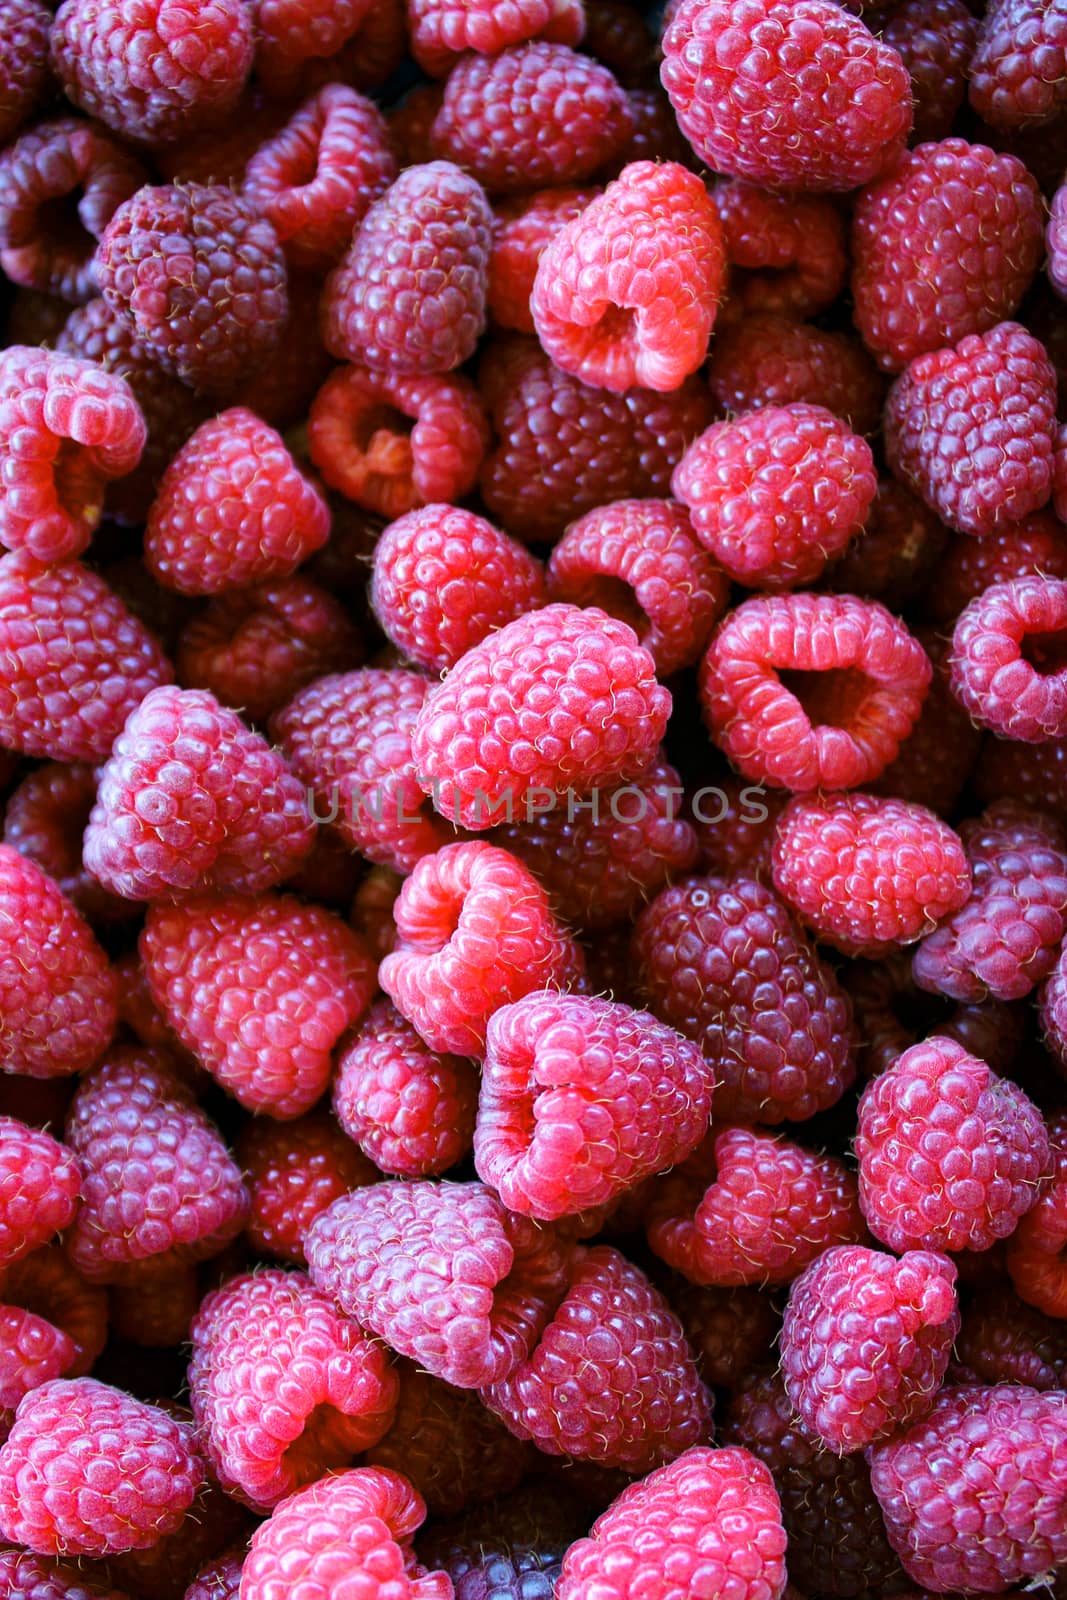 Vertical shot and top view shot. Raspberries. Full frame of raspberries. Zavidovici, Bosnia and Herzegovina.